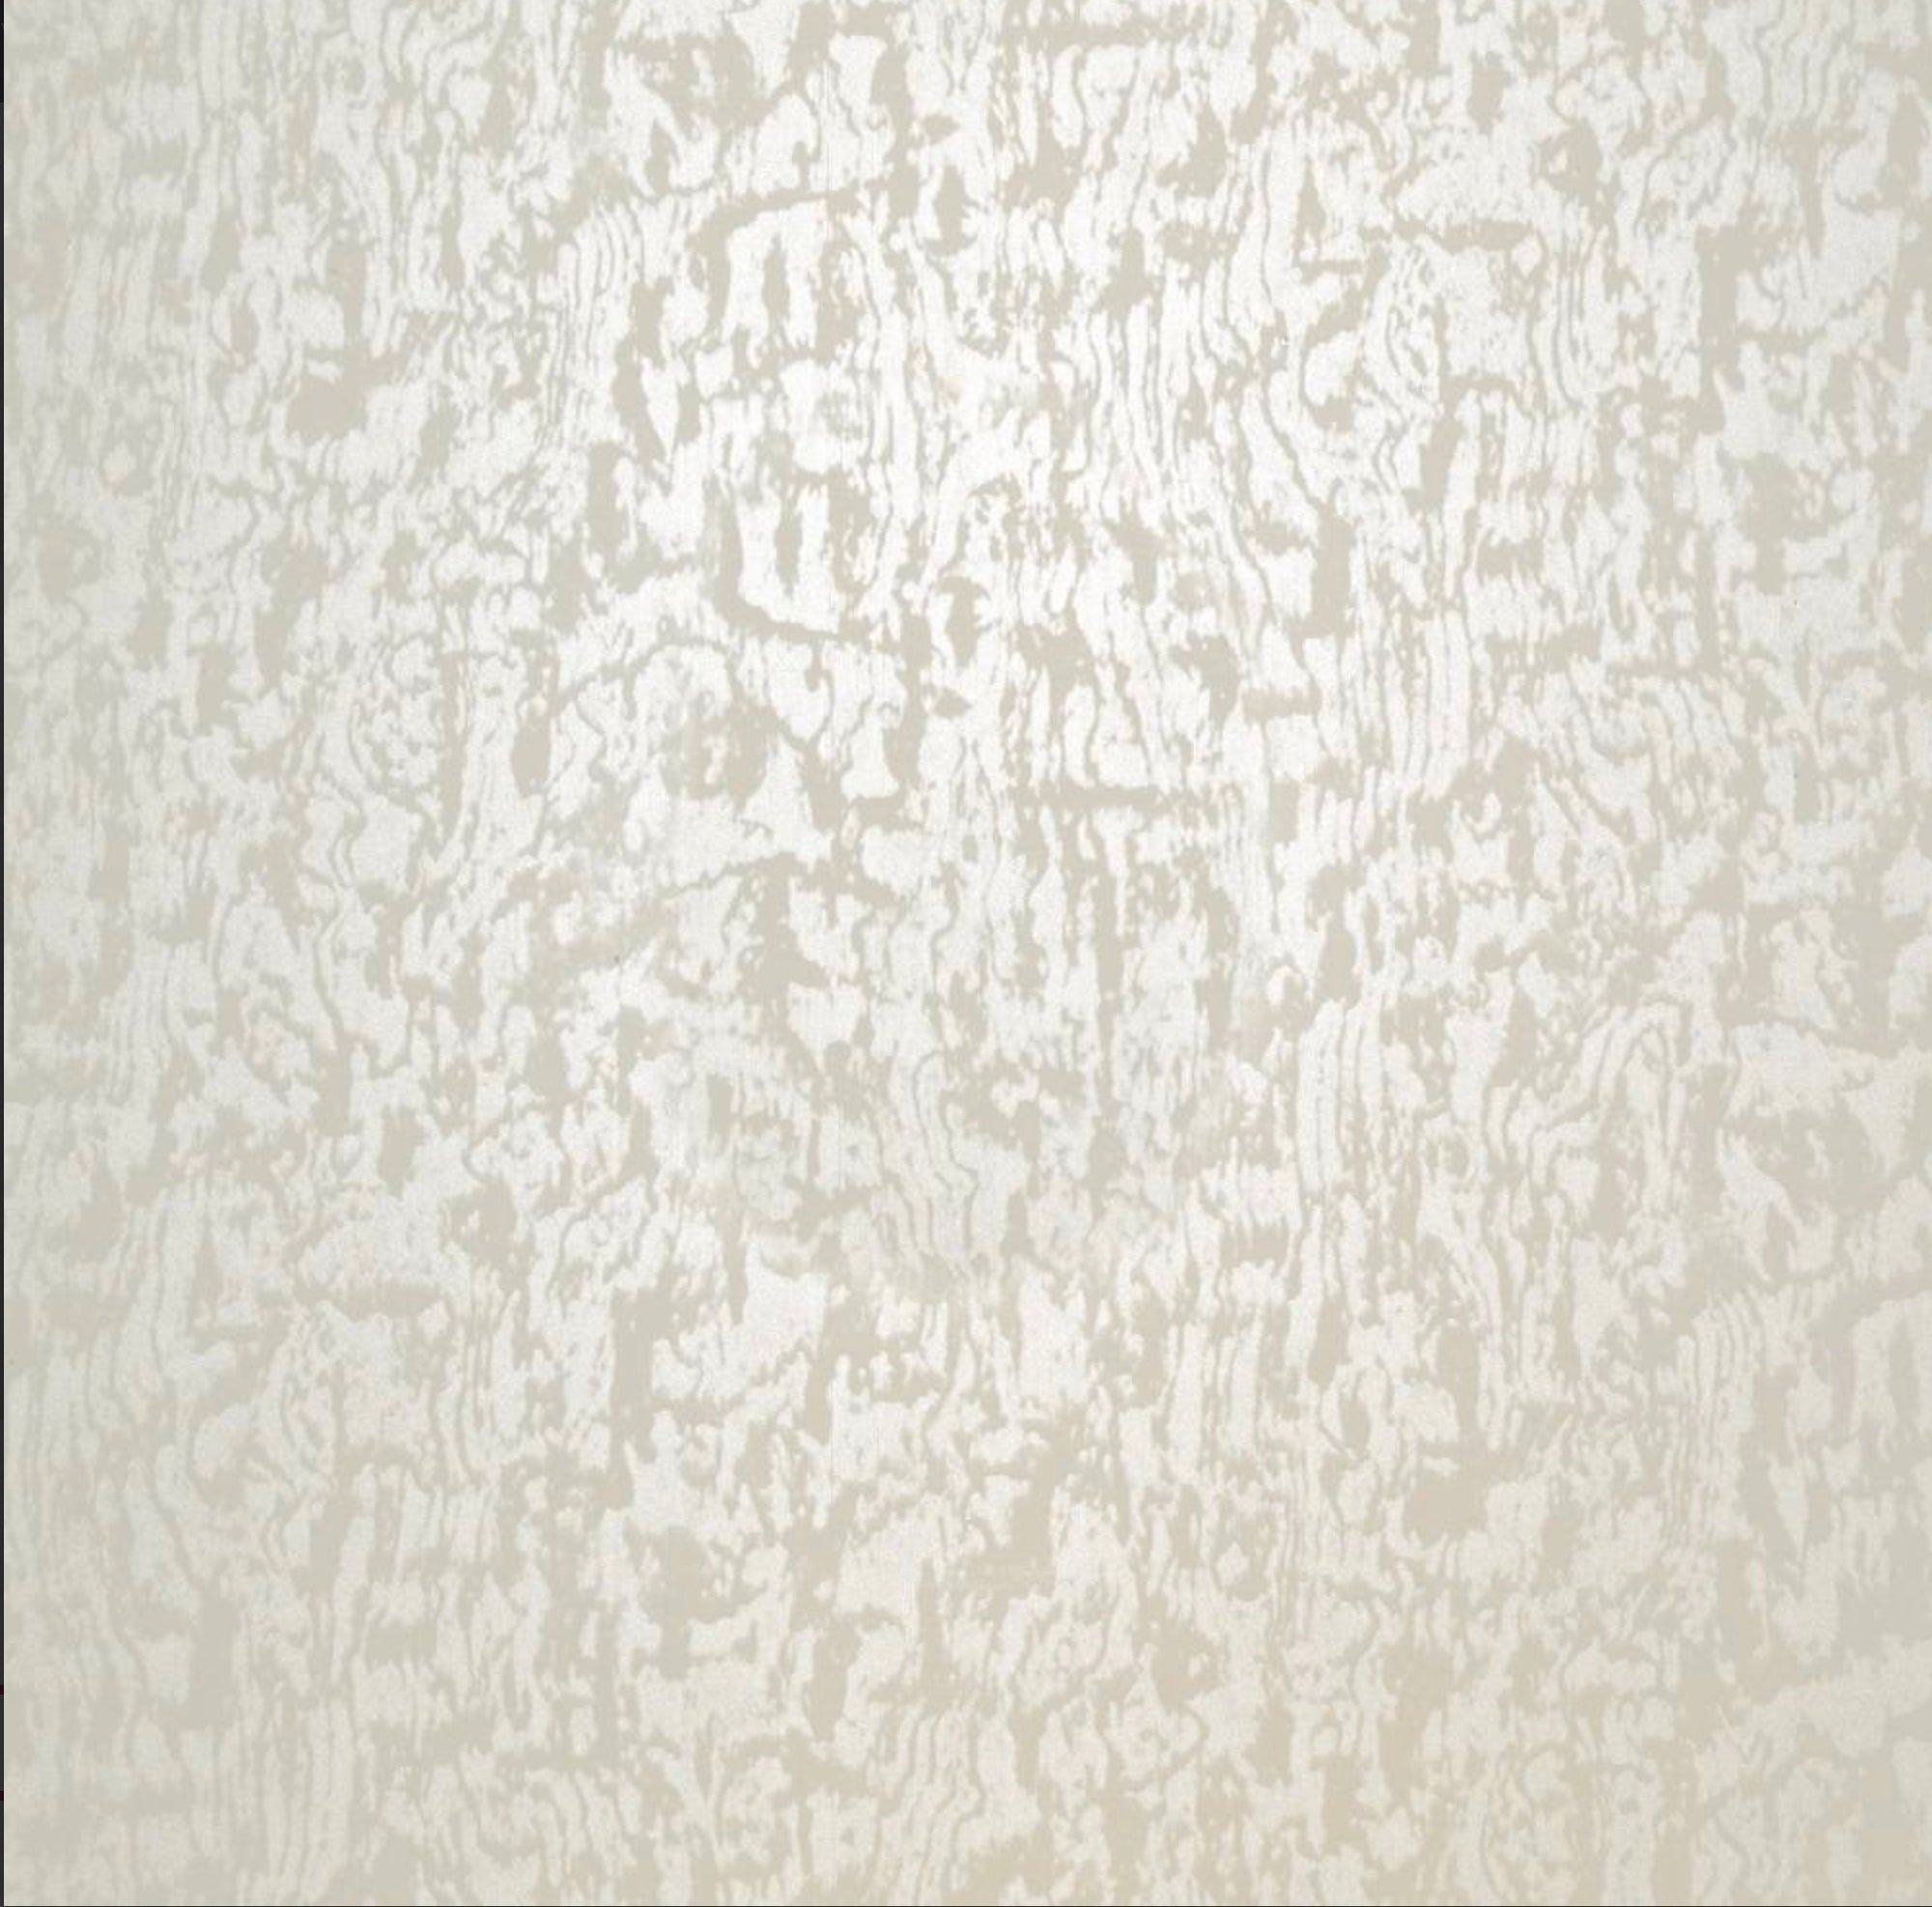 SplashPanel PVC Wall Panel - Pearlescent White